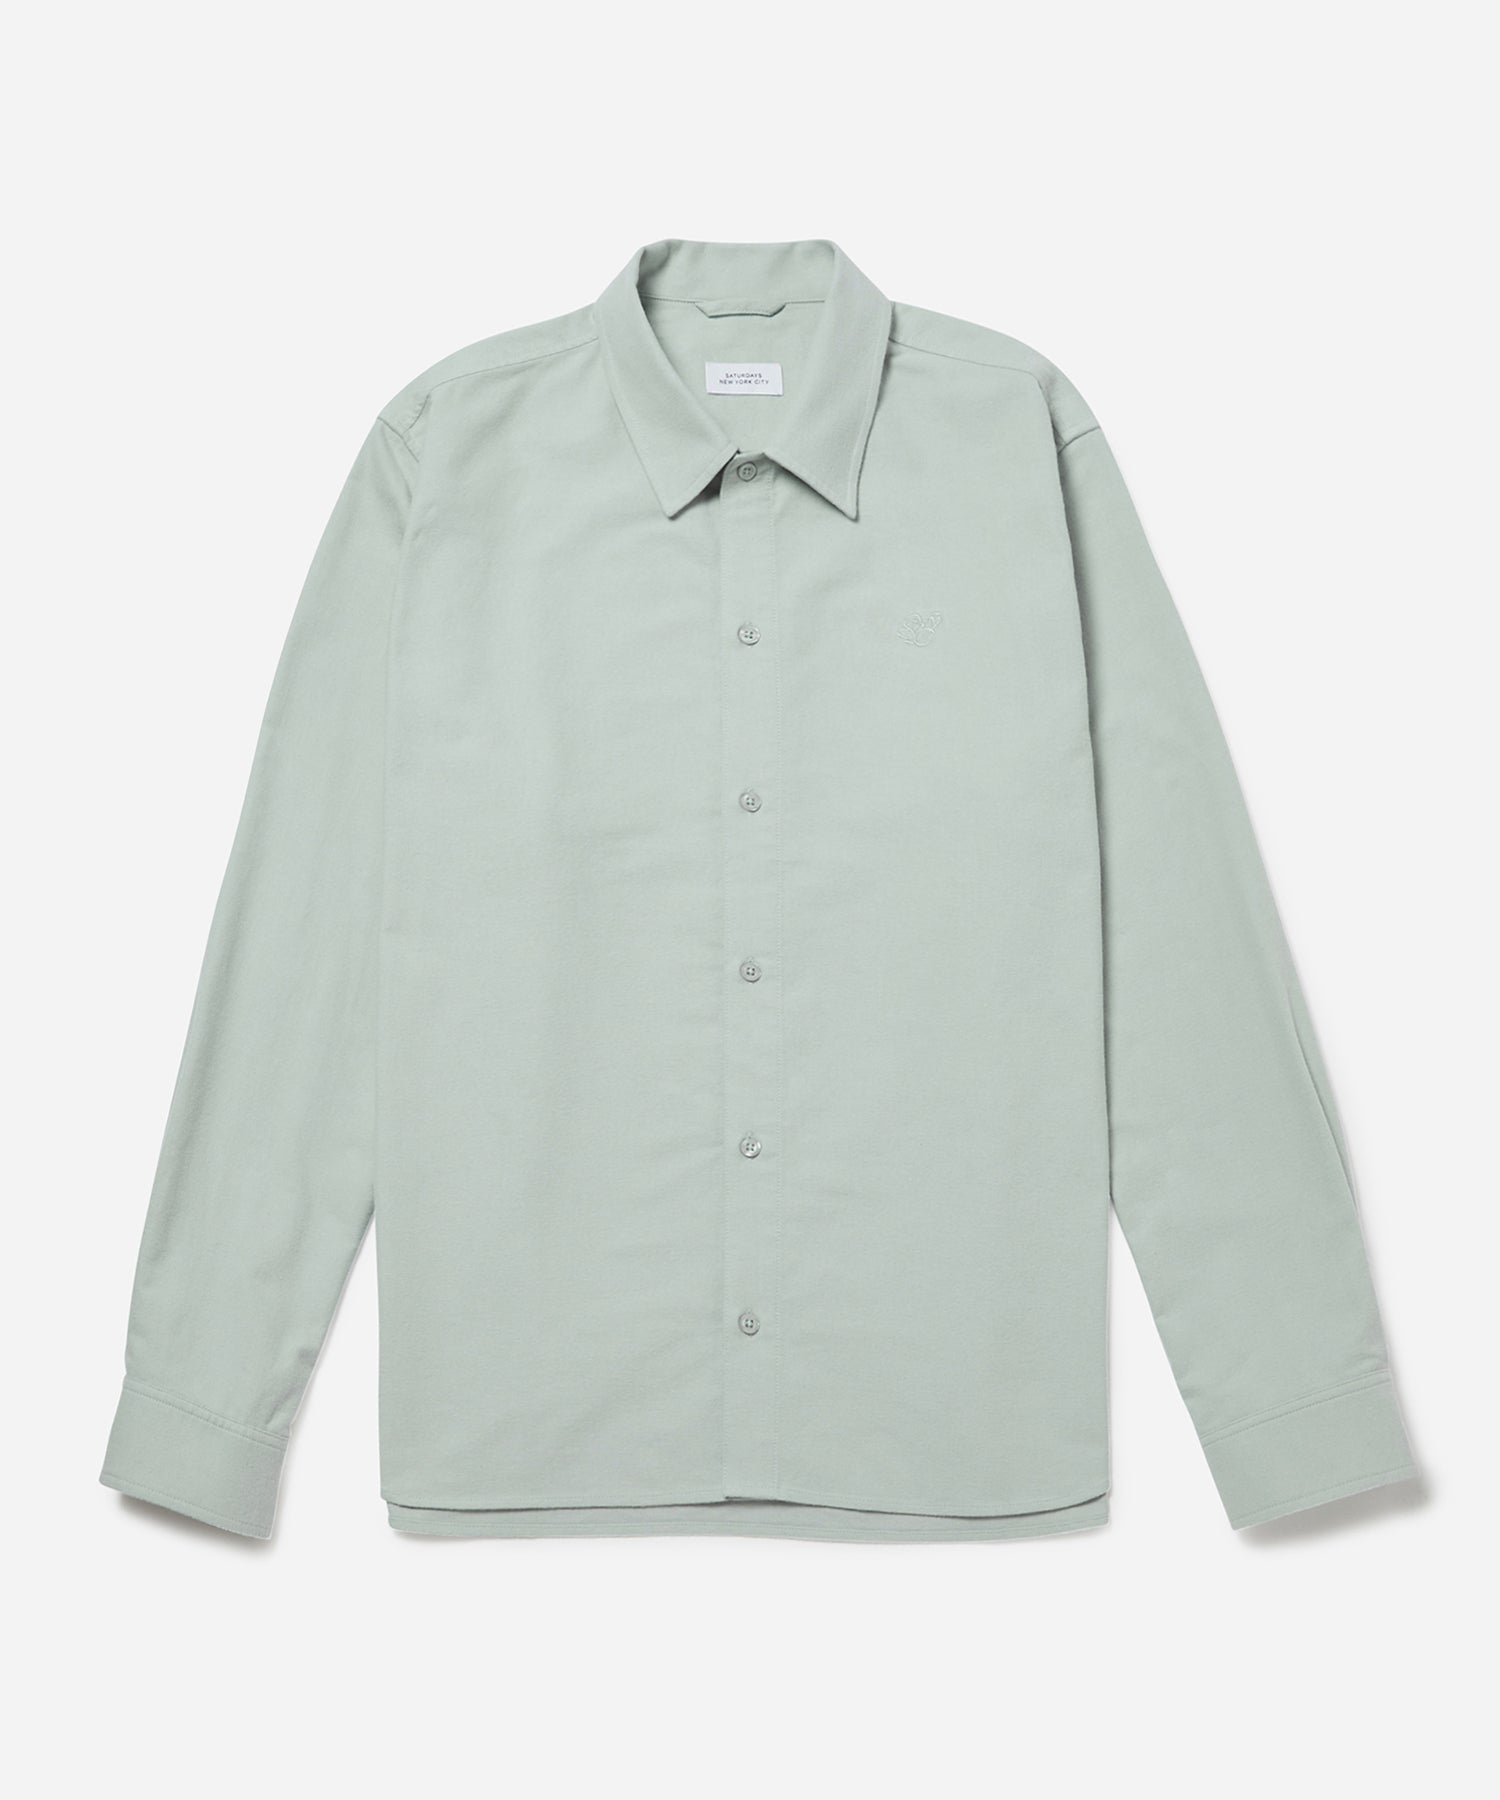 Broome Flannel Long Sleeve Shirt